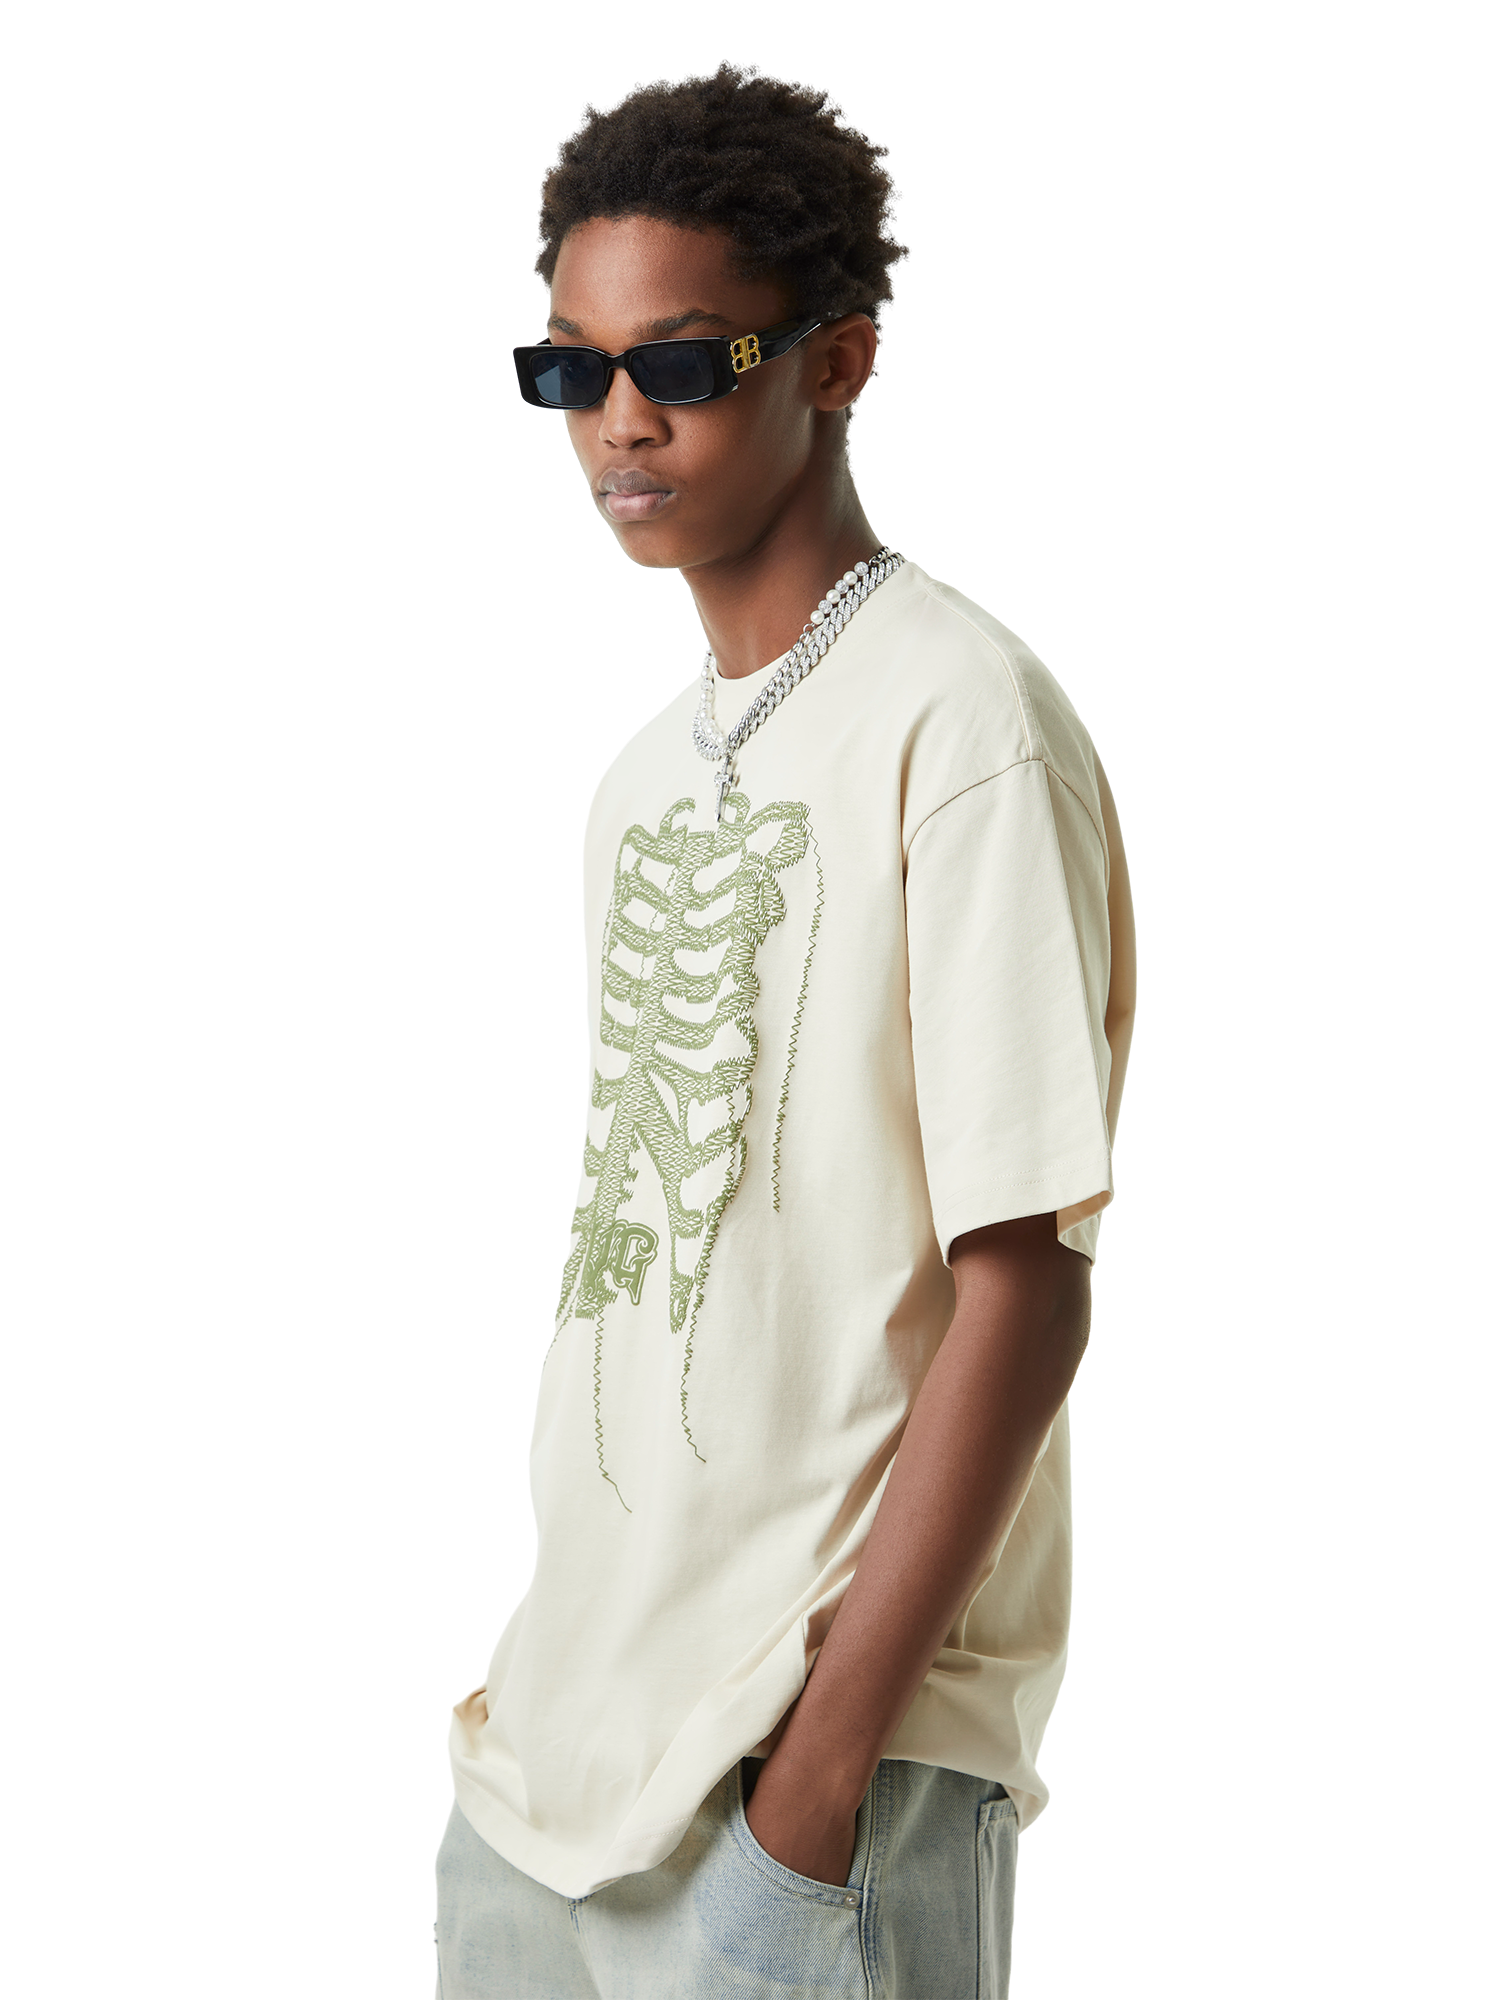 Thesupermade American Street Fashion Skull Print T-shirt